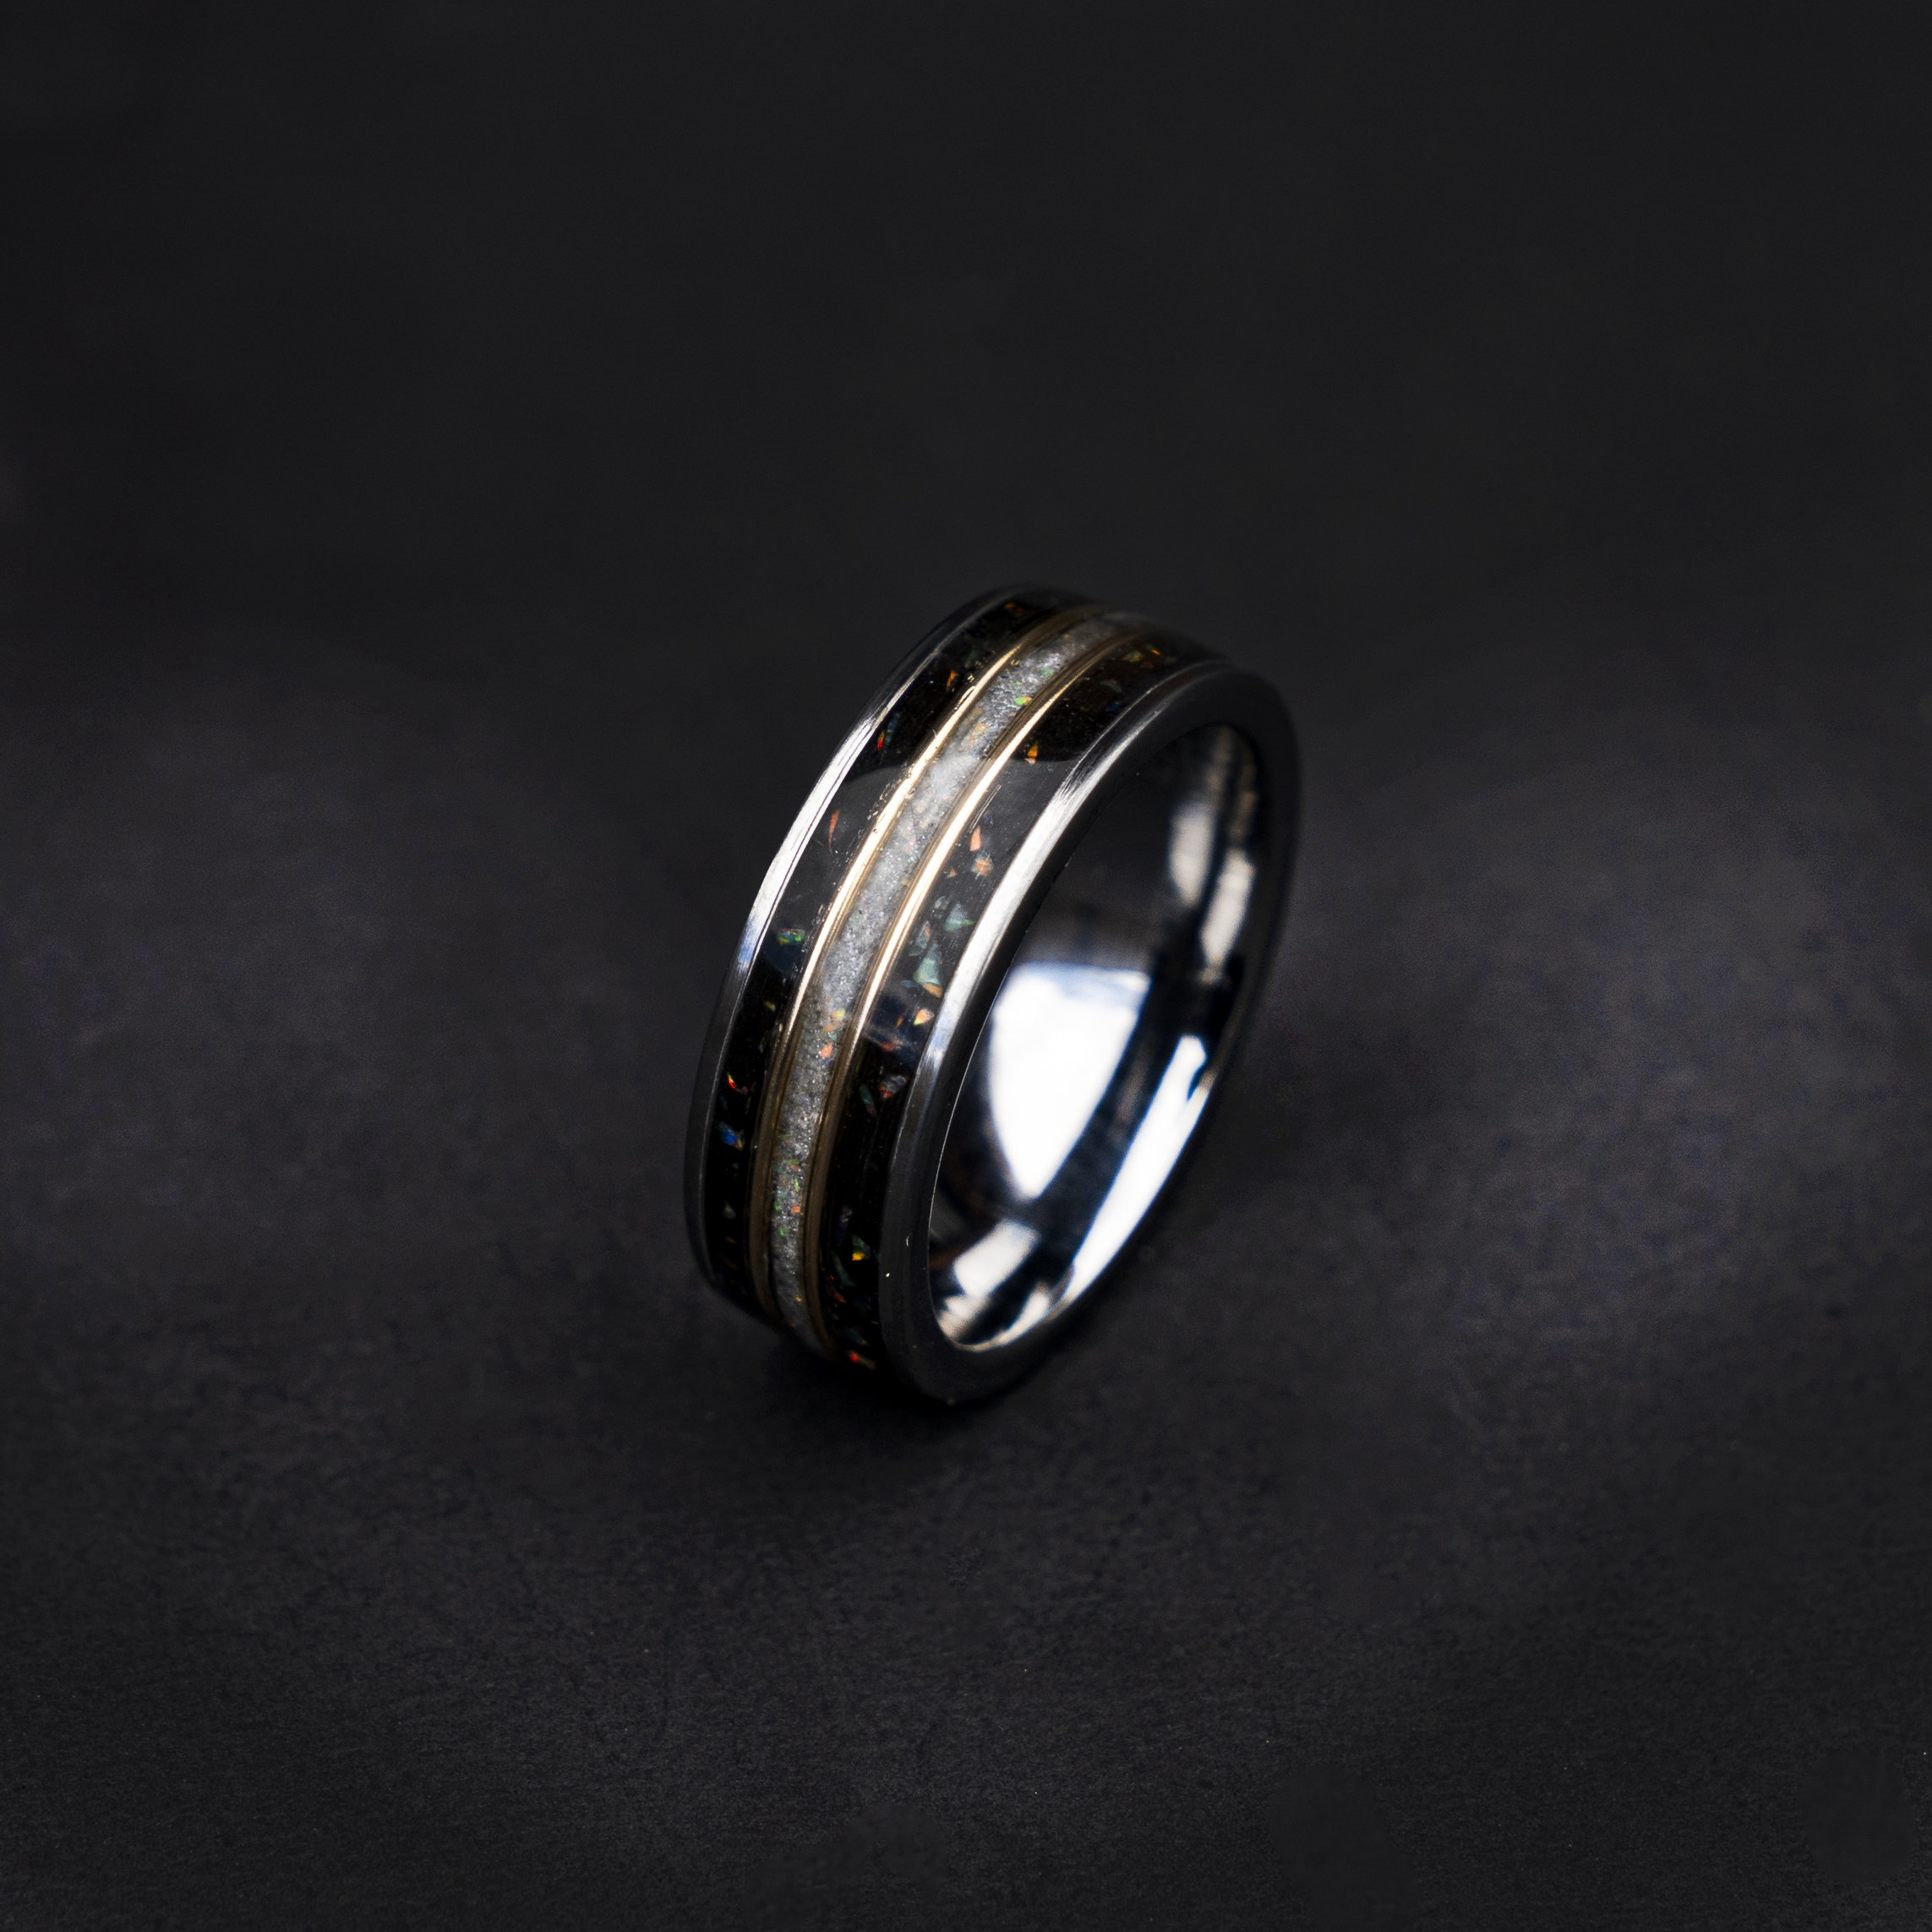 Buy Engagement ring, wedding ring,sterling silver, handmade wedding ring,platinum  plated online at aStudio1980.com